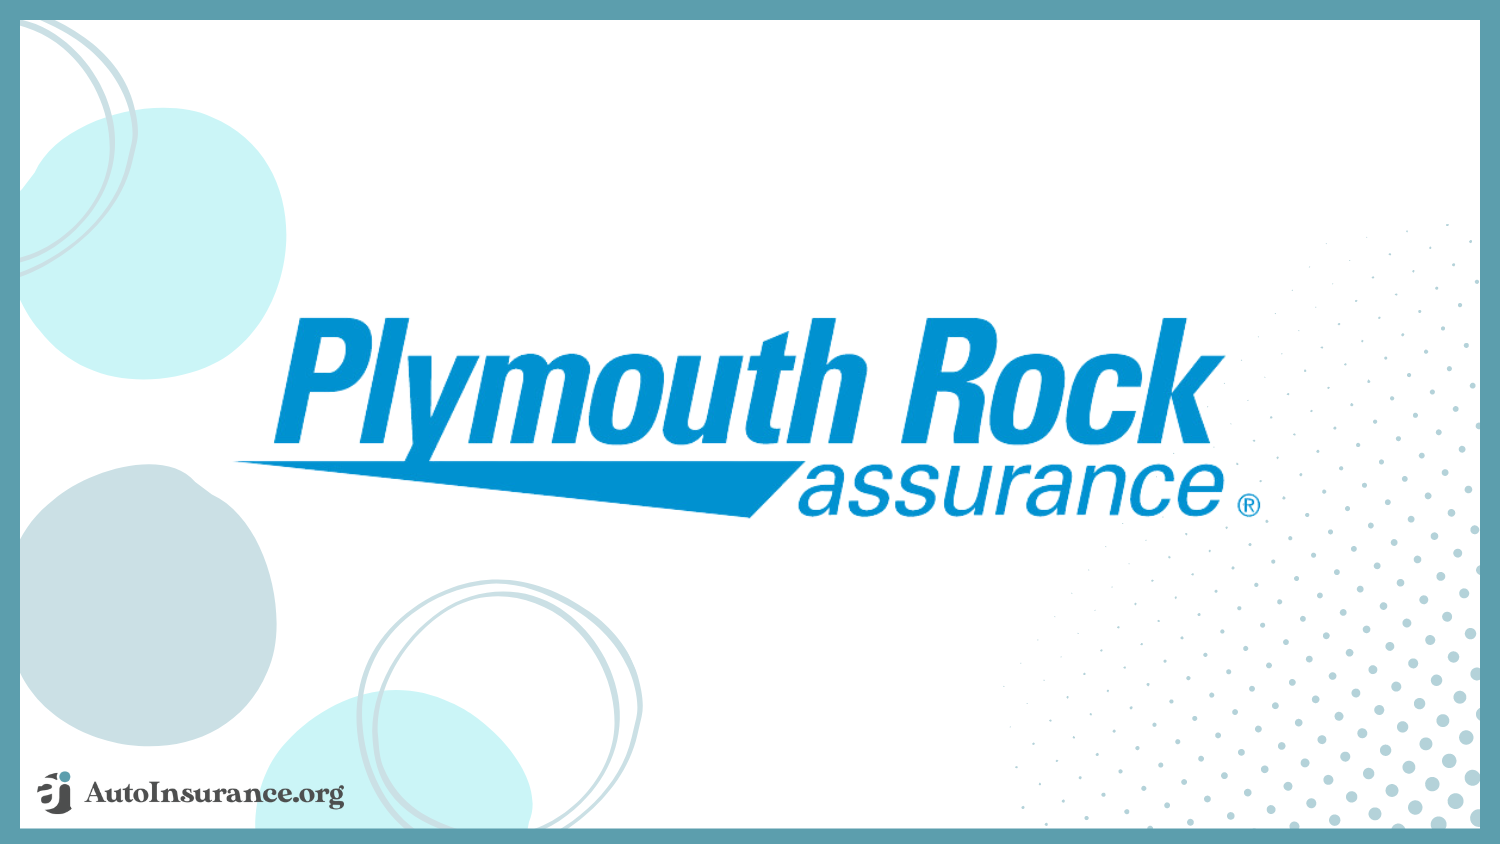 Best Hyundai Elantra Hybrid Auto Insurance: Plymouth Rock